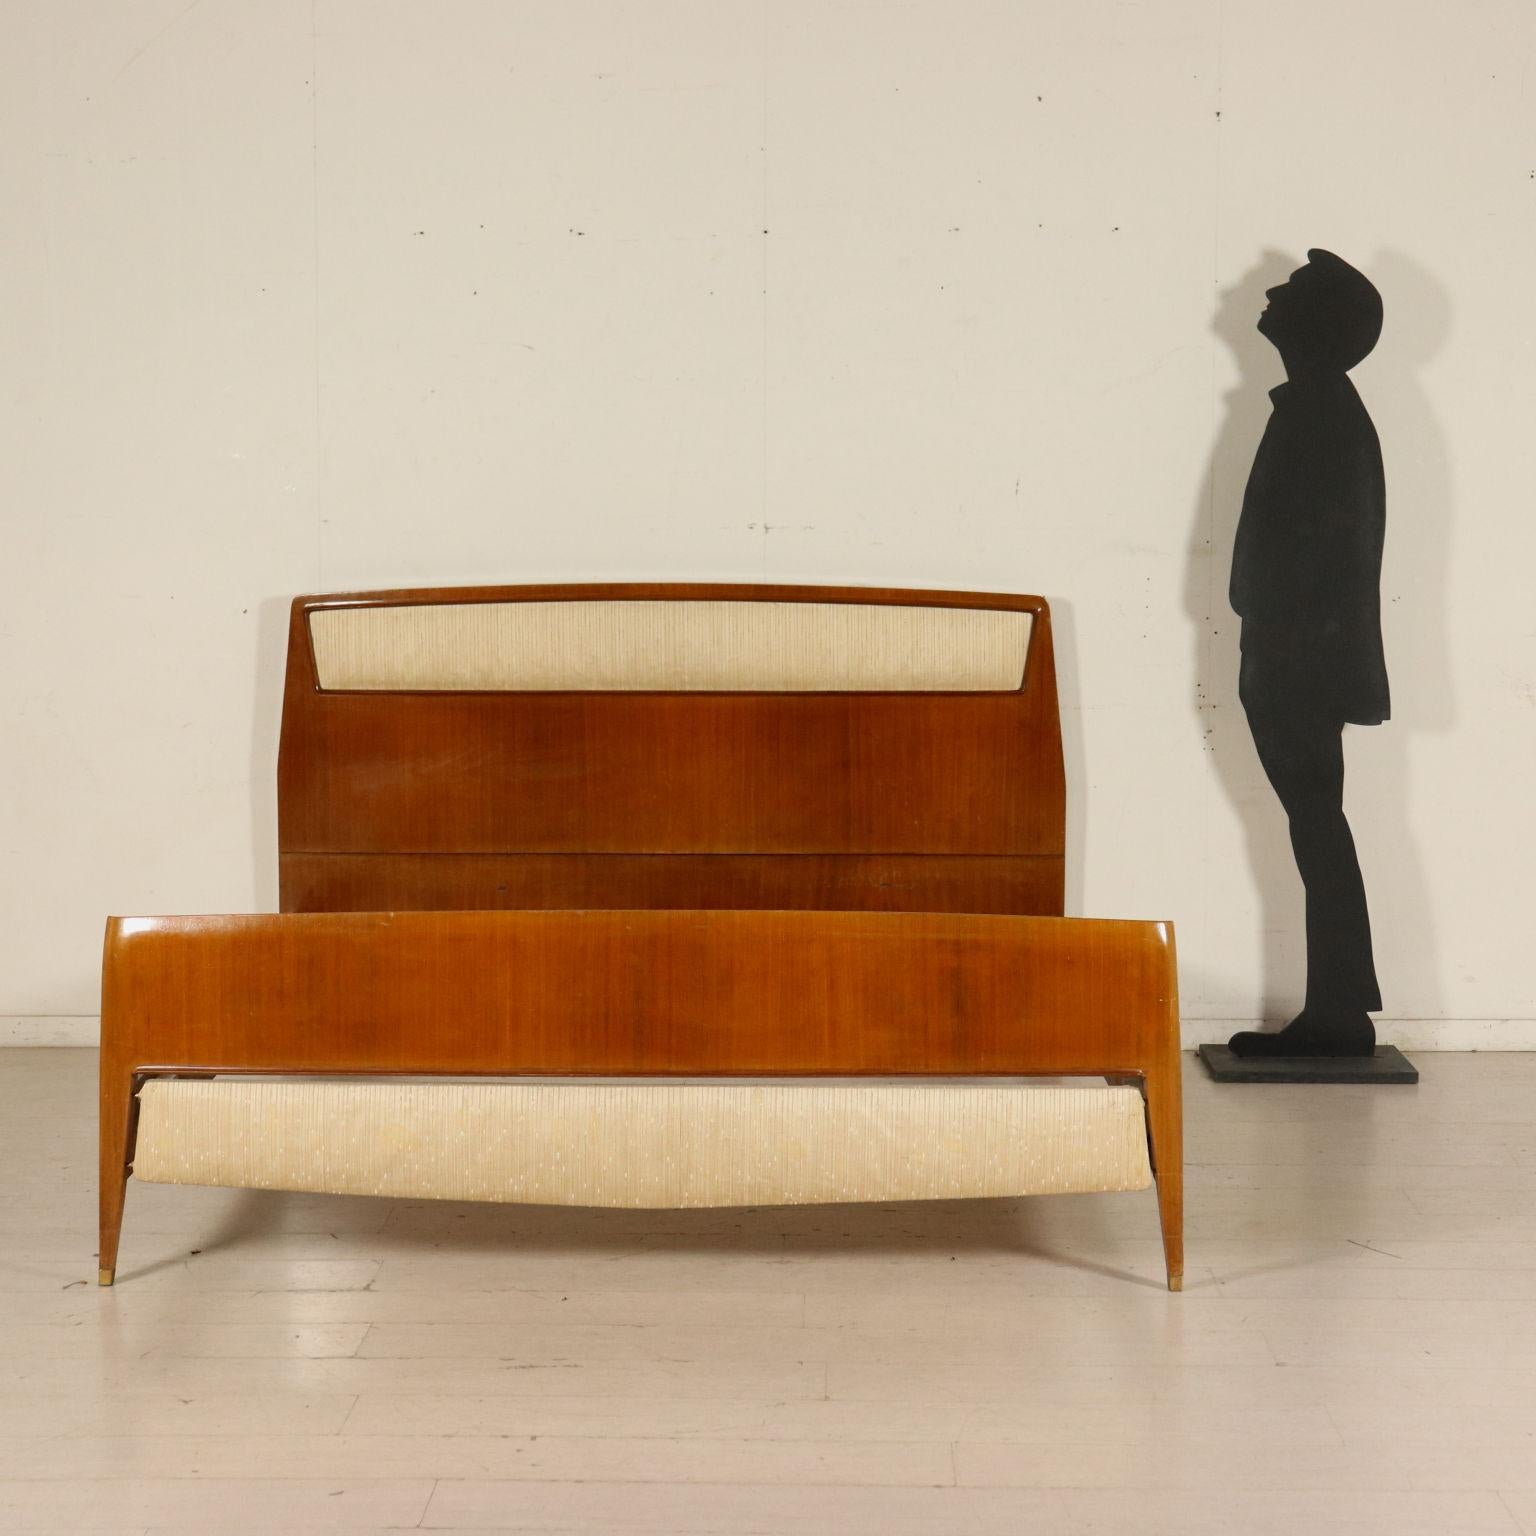 A double bed designed for Consorzio Esposizione Mobili Cantu', mahogany veneer, fabric upholstery, brass ferrules. Manufactured in Cantu', 1950s.